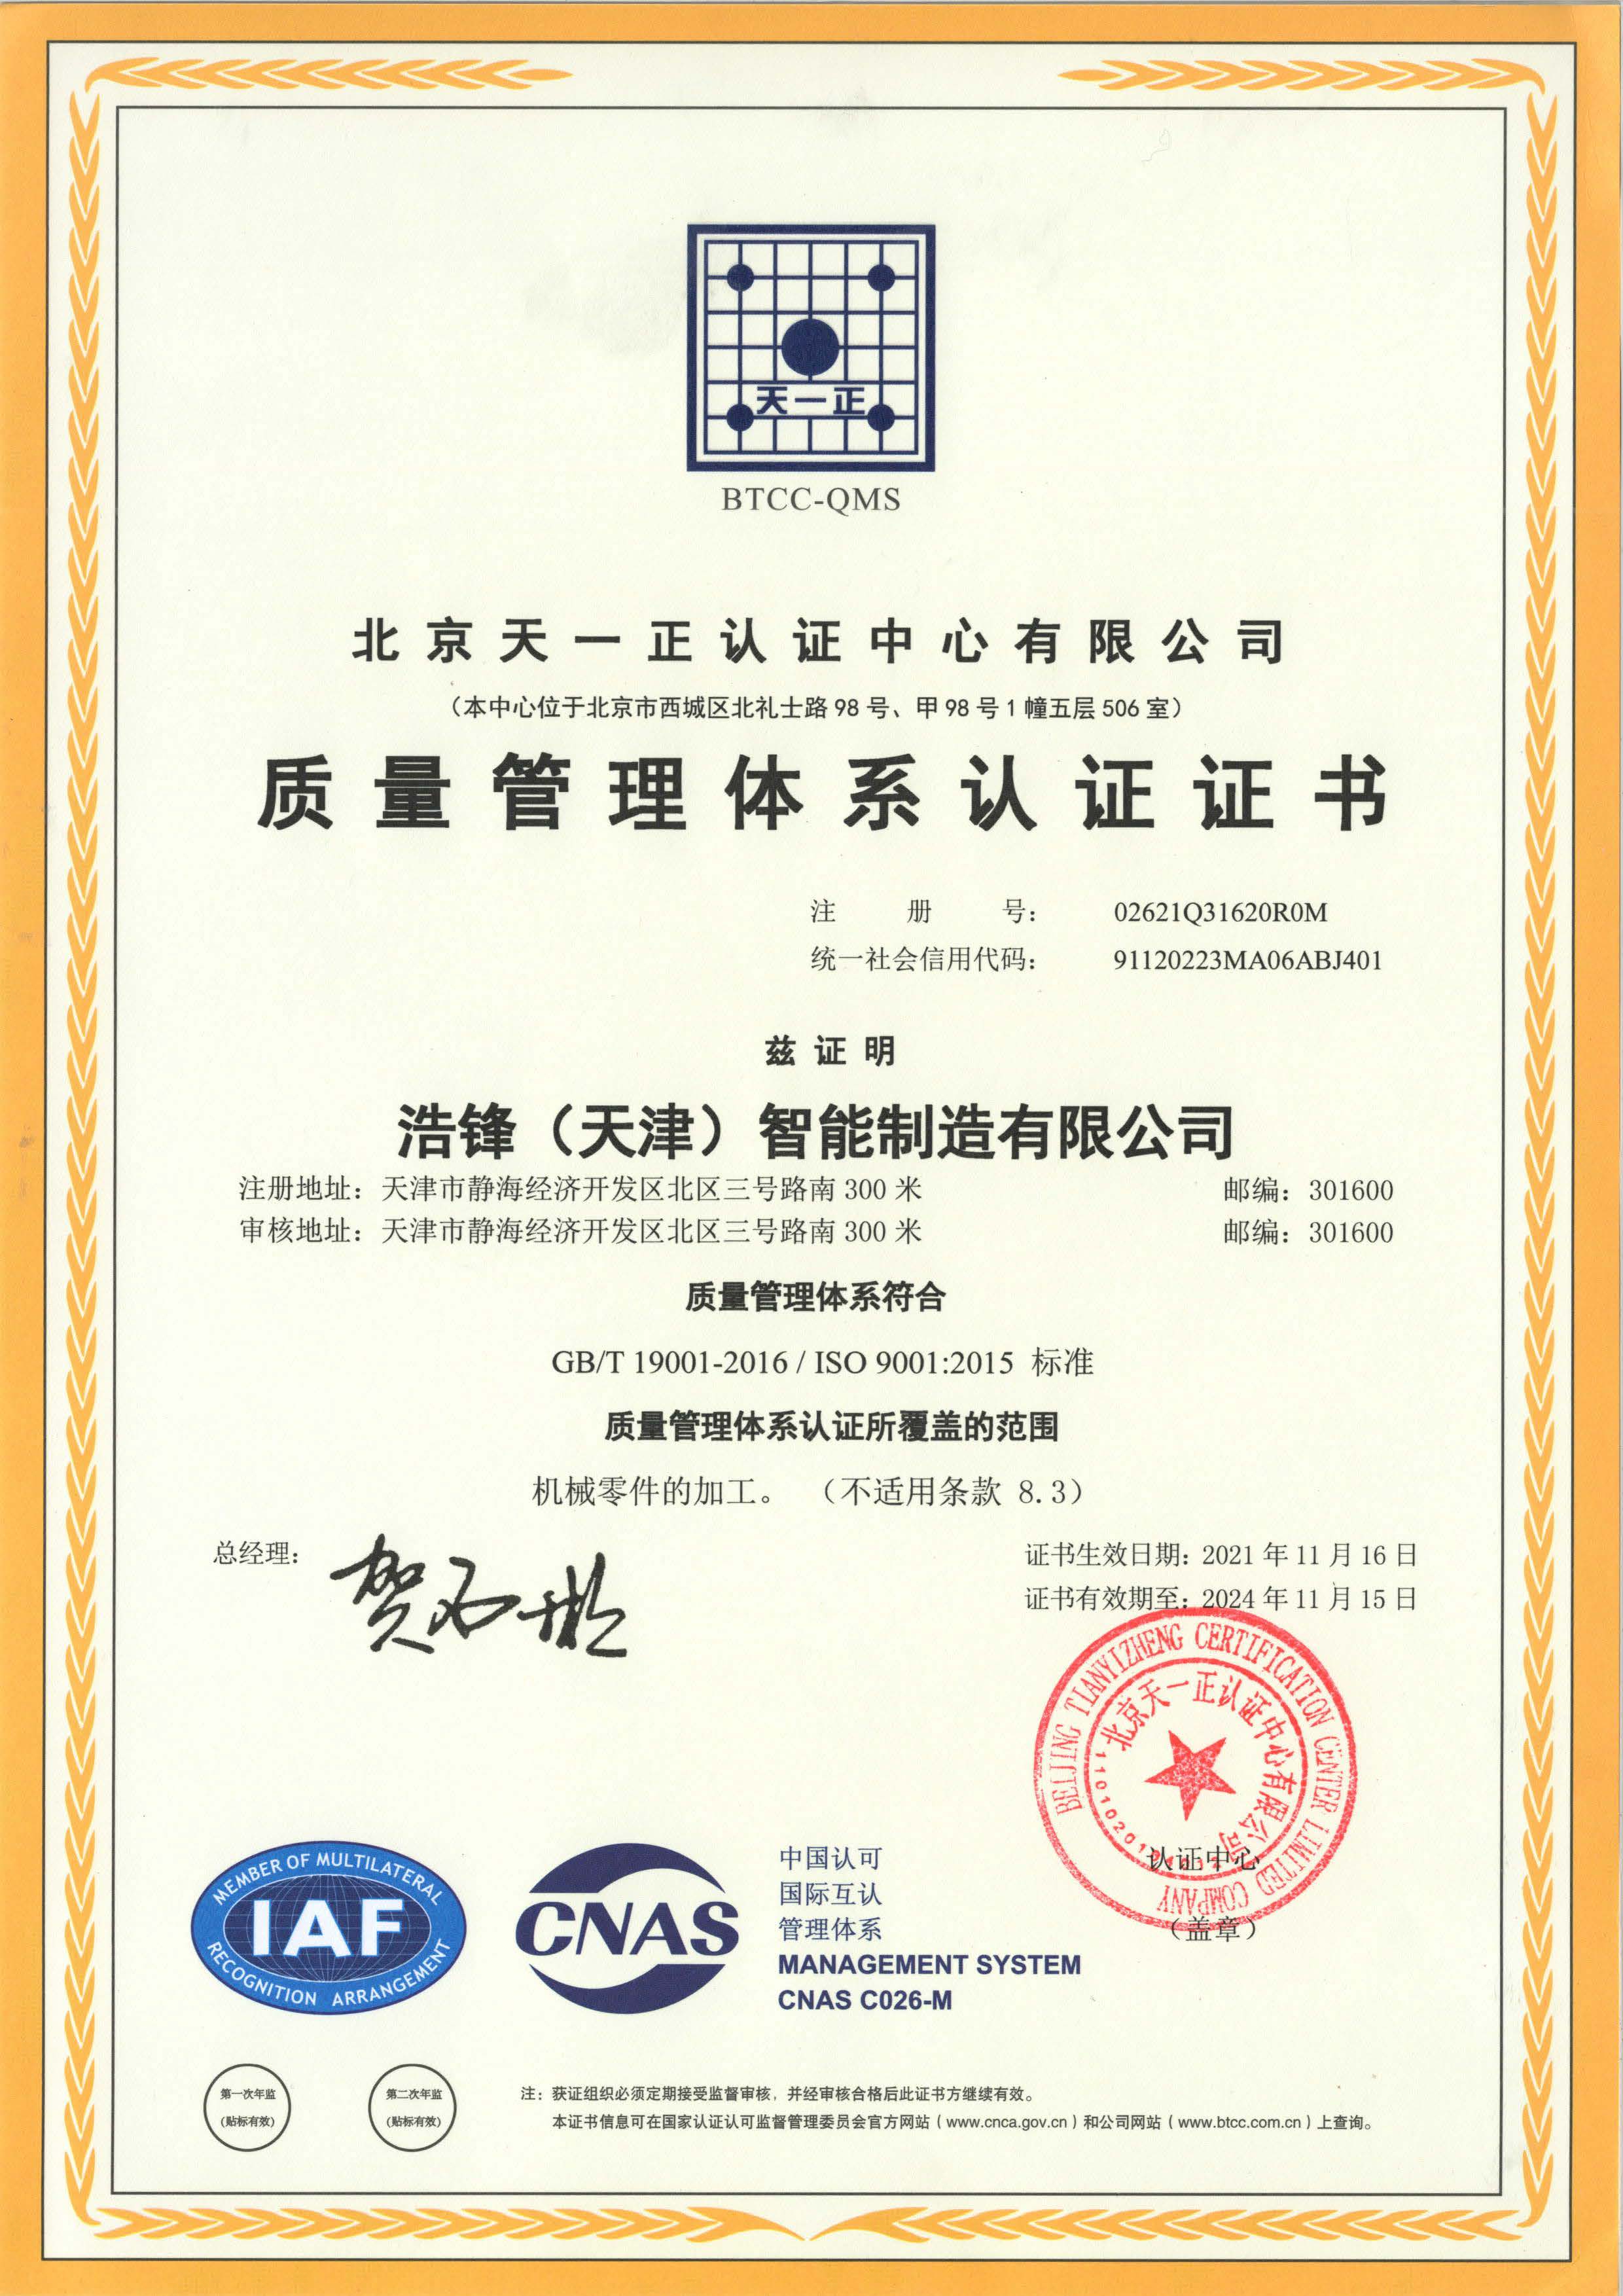 IAF 雄偉ISO9001管理體系證書-中文